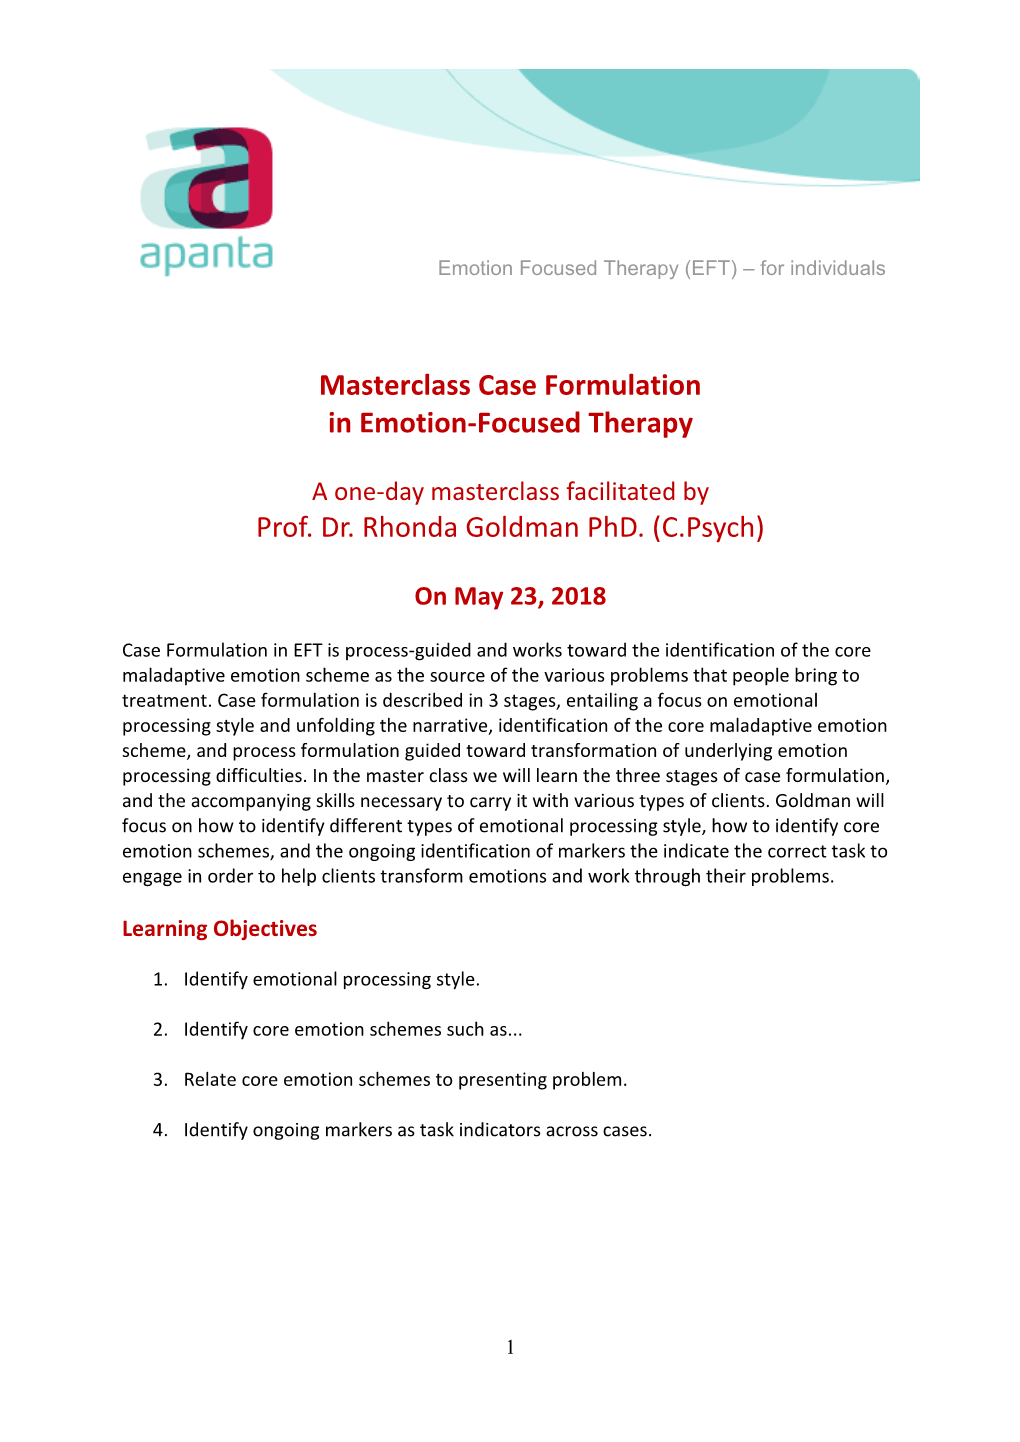 Masterclass Case Formulation in Emotion-Focused Therapy Prof. Dr. Rhonda Goldman Phd